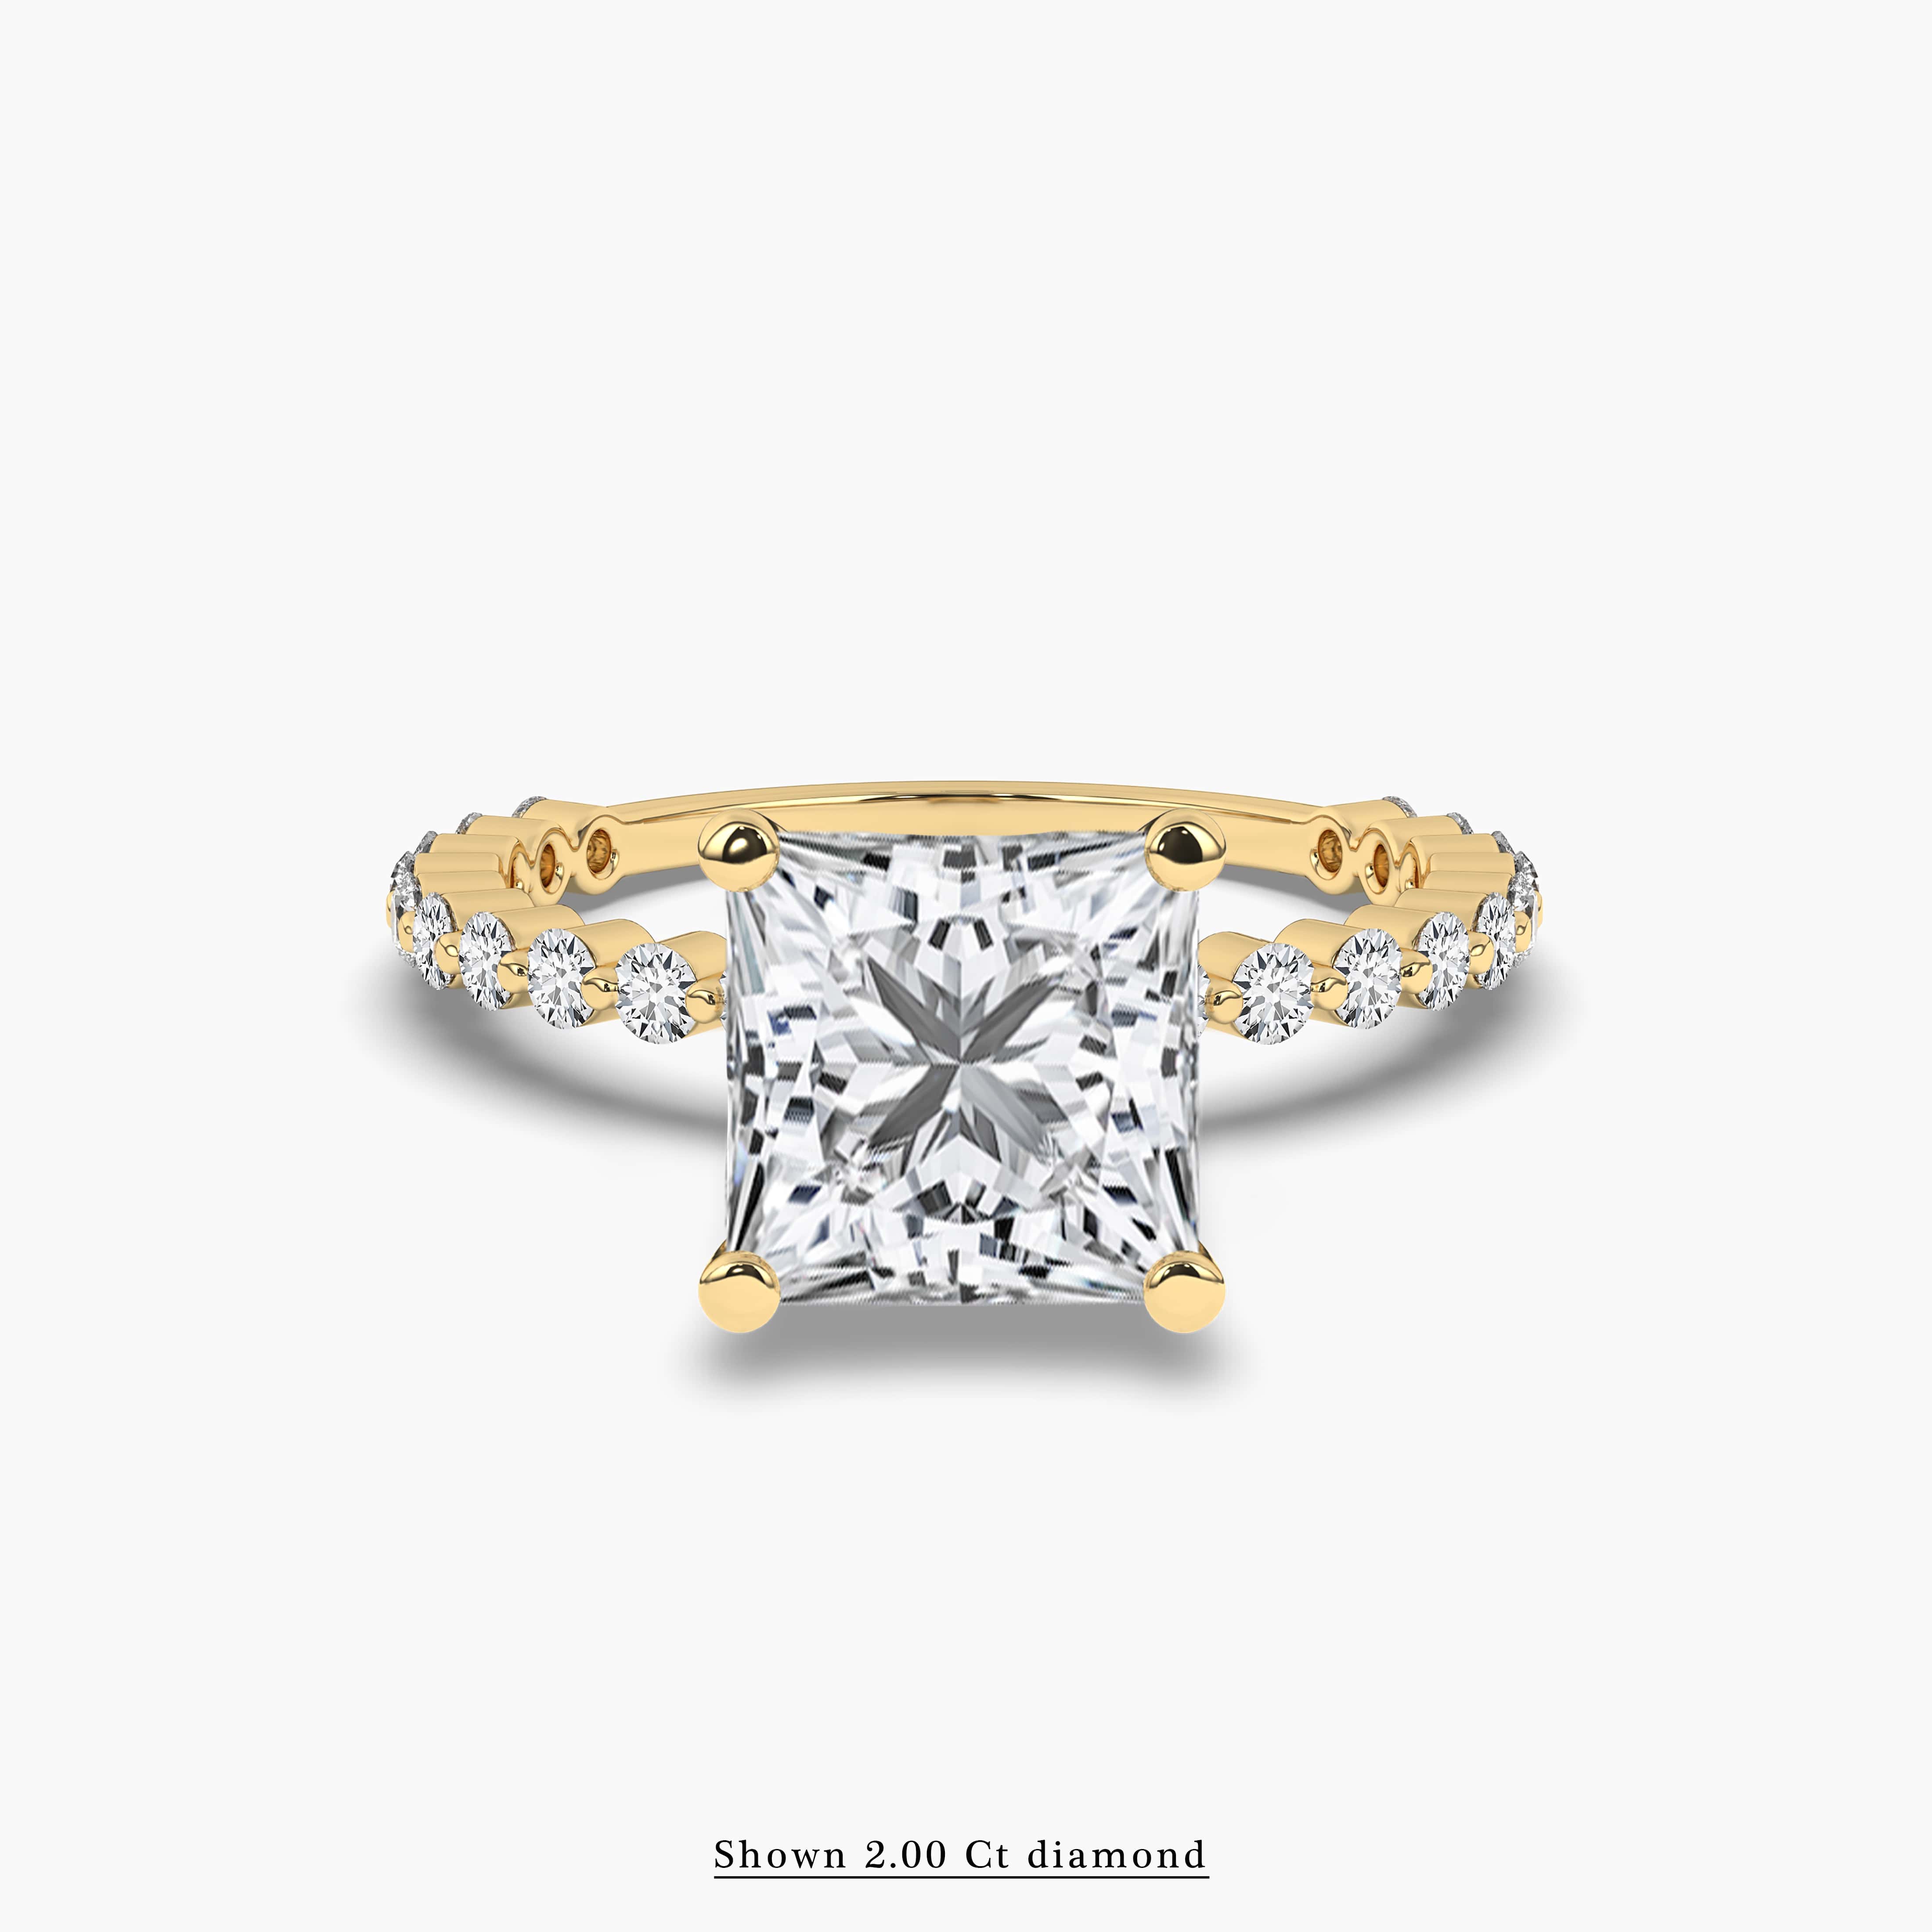 Princess Cut Diamond Ring With Side Stone